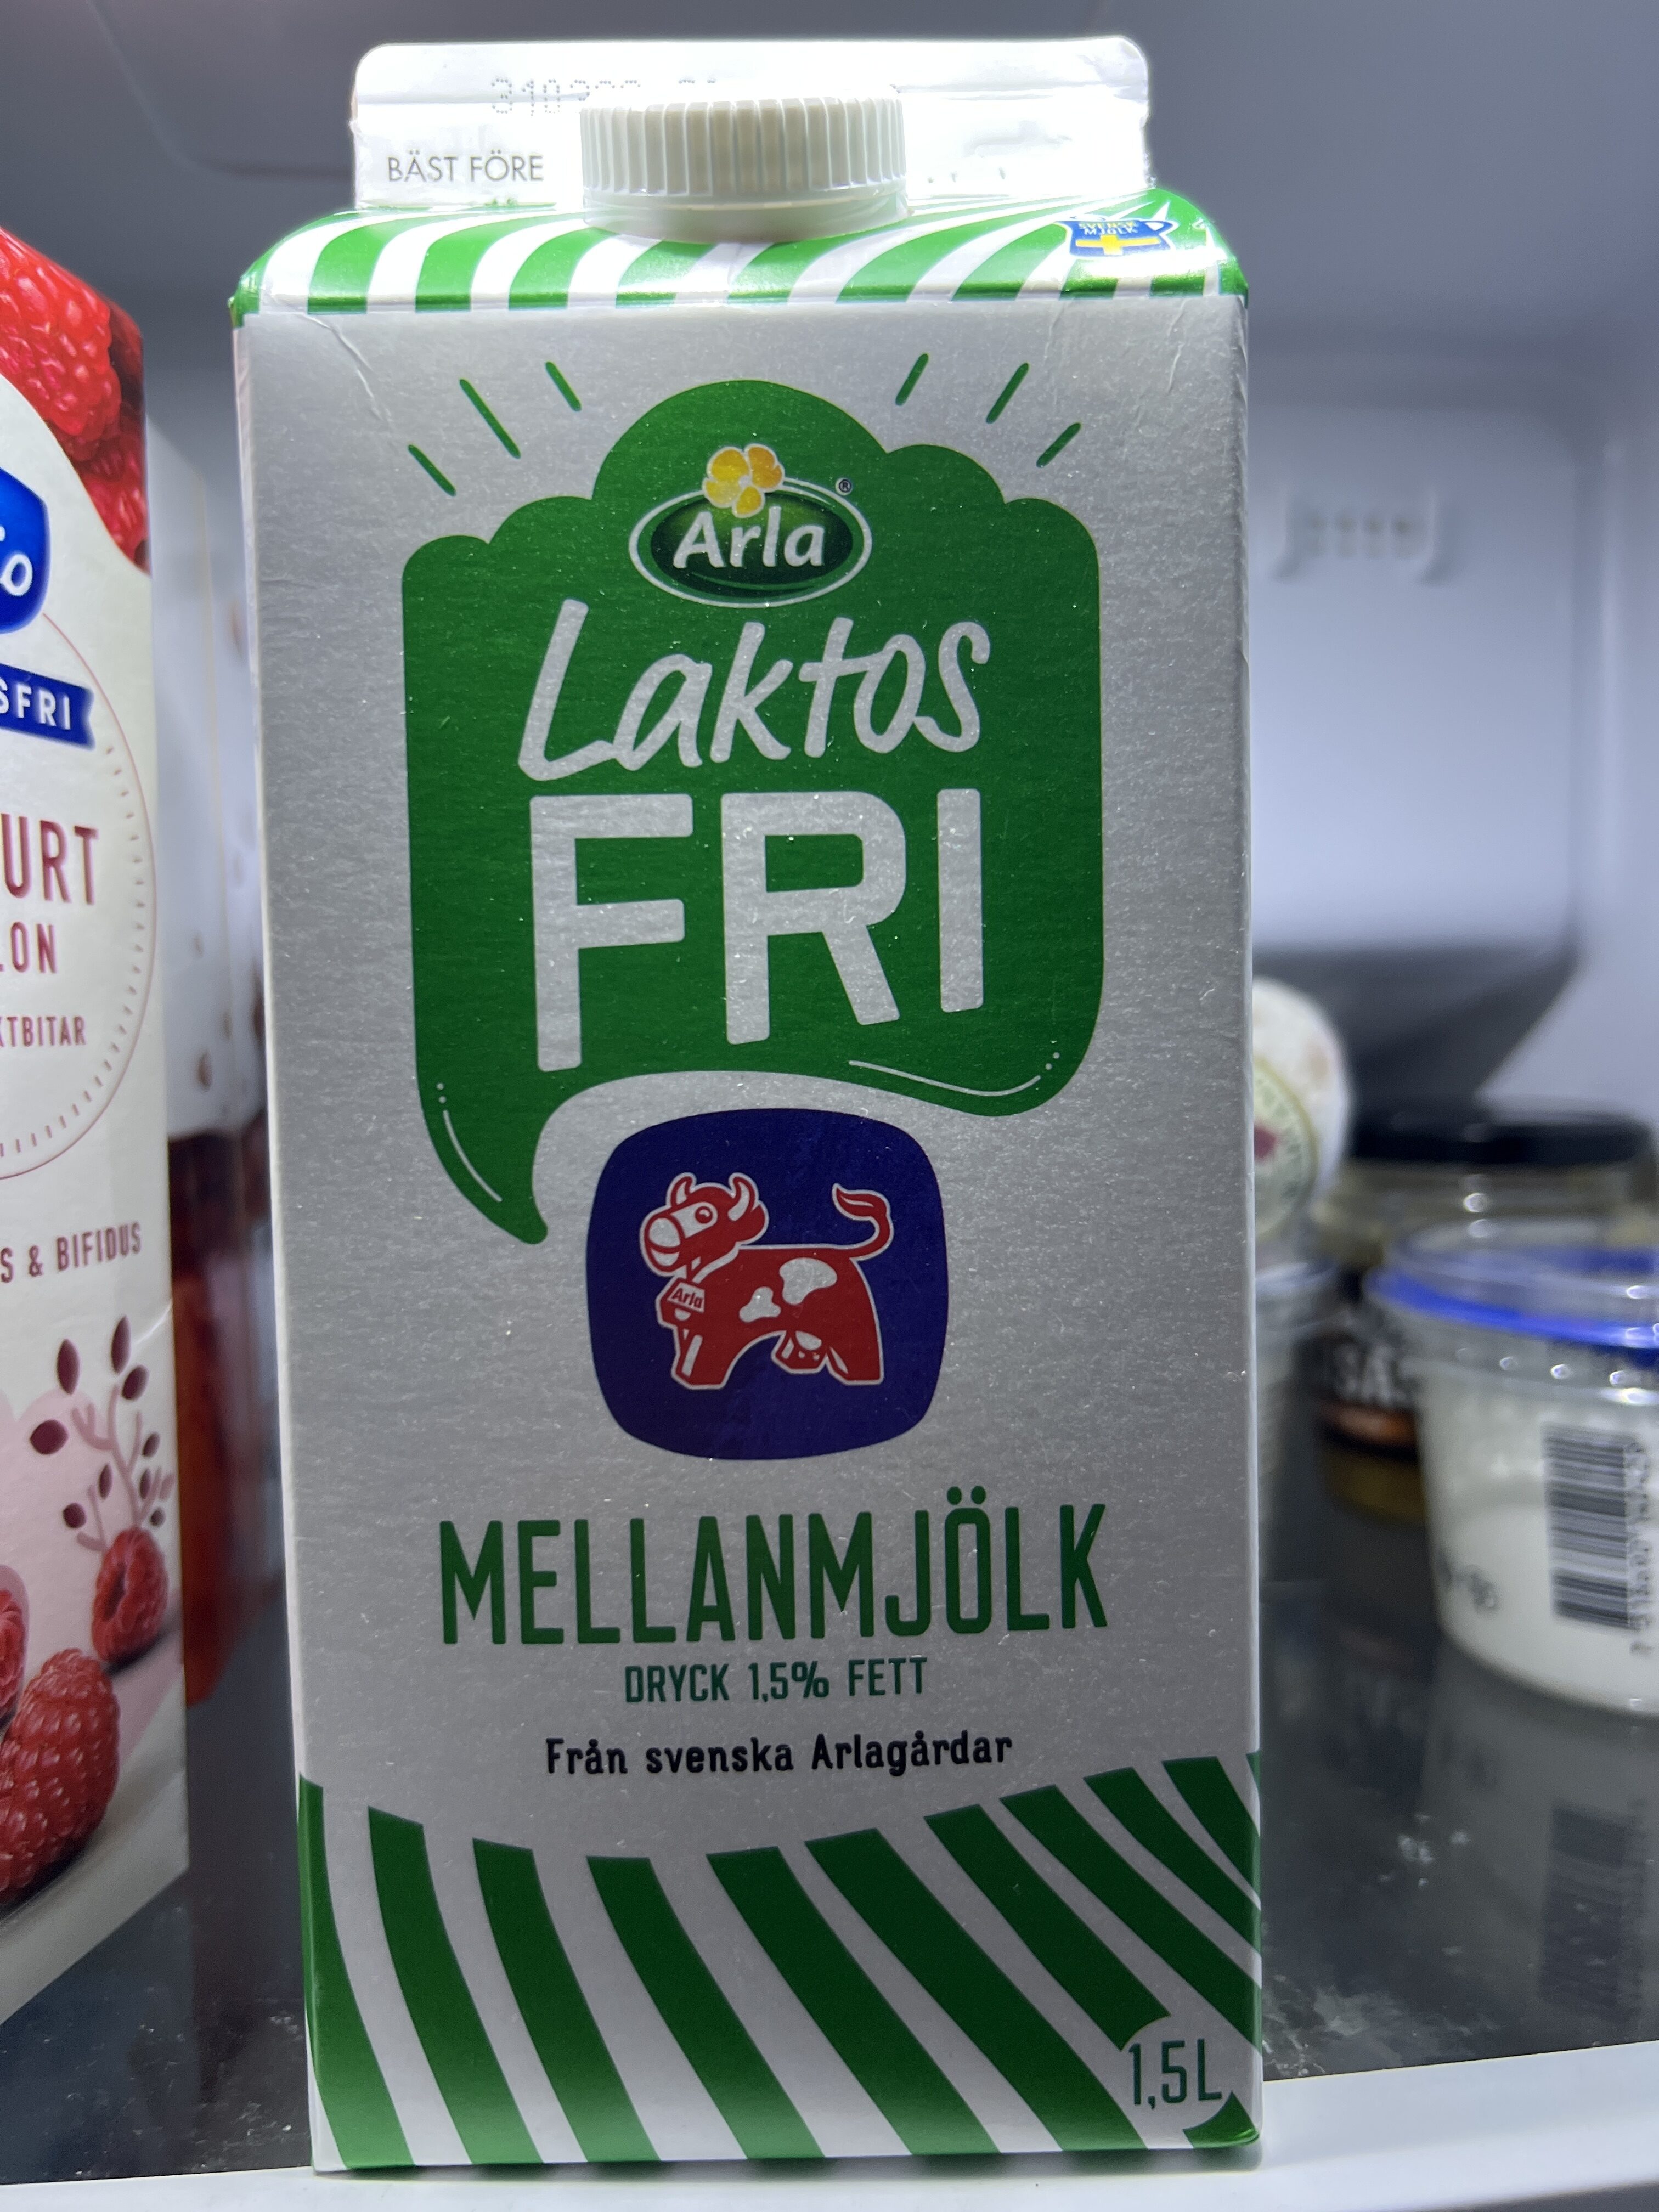 Laktosfri Mellanmjölk - Product - en